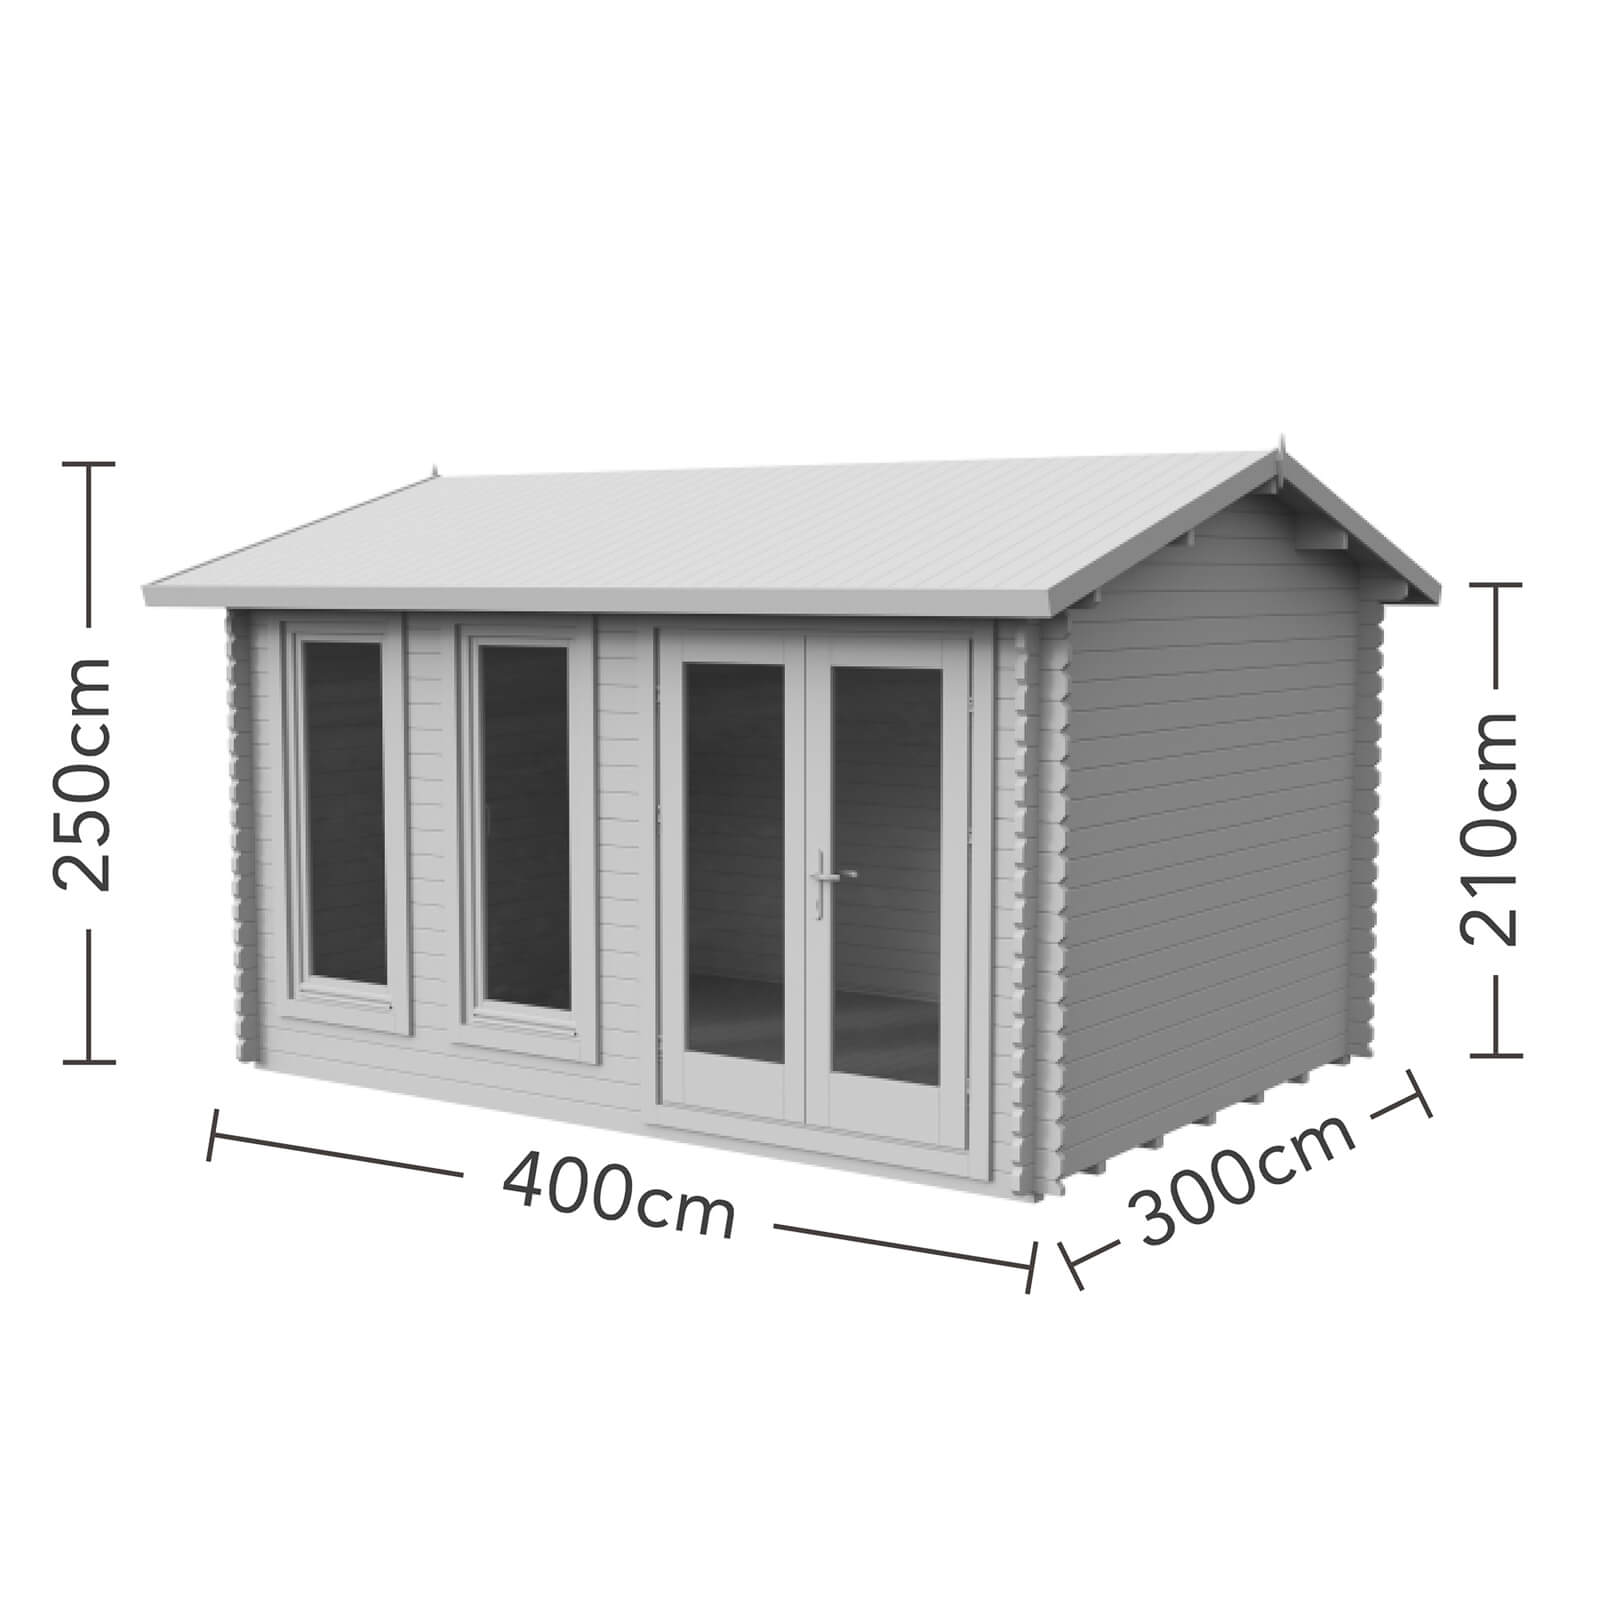 Forest Chiltern 4.0m x 3.0m Log Cabin Double Glazed 24kg Felt, Plus Underlay - Installation Included